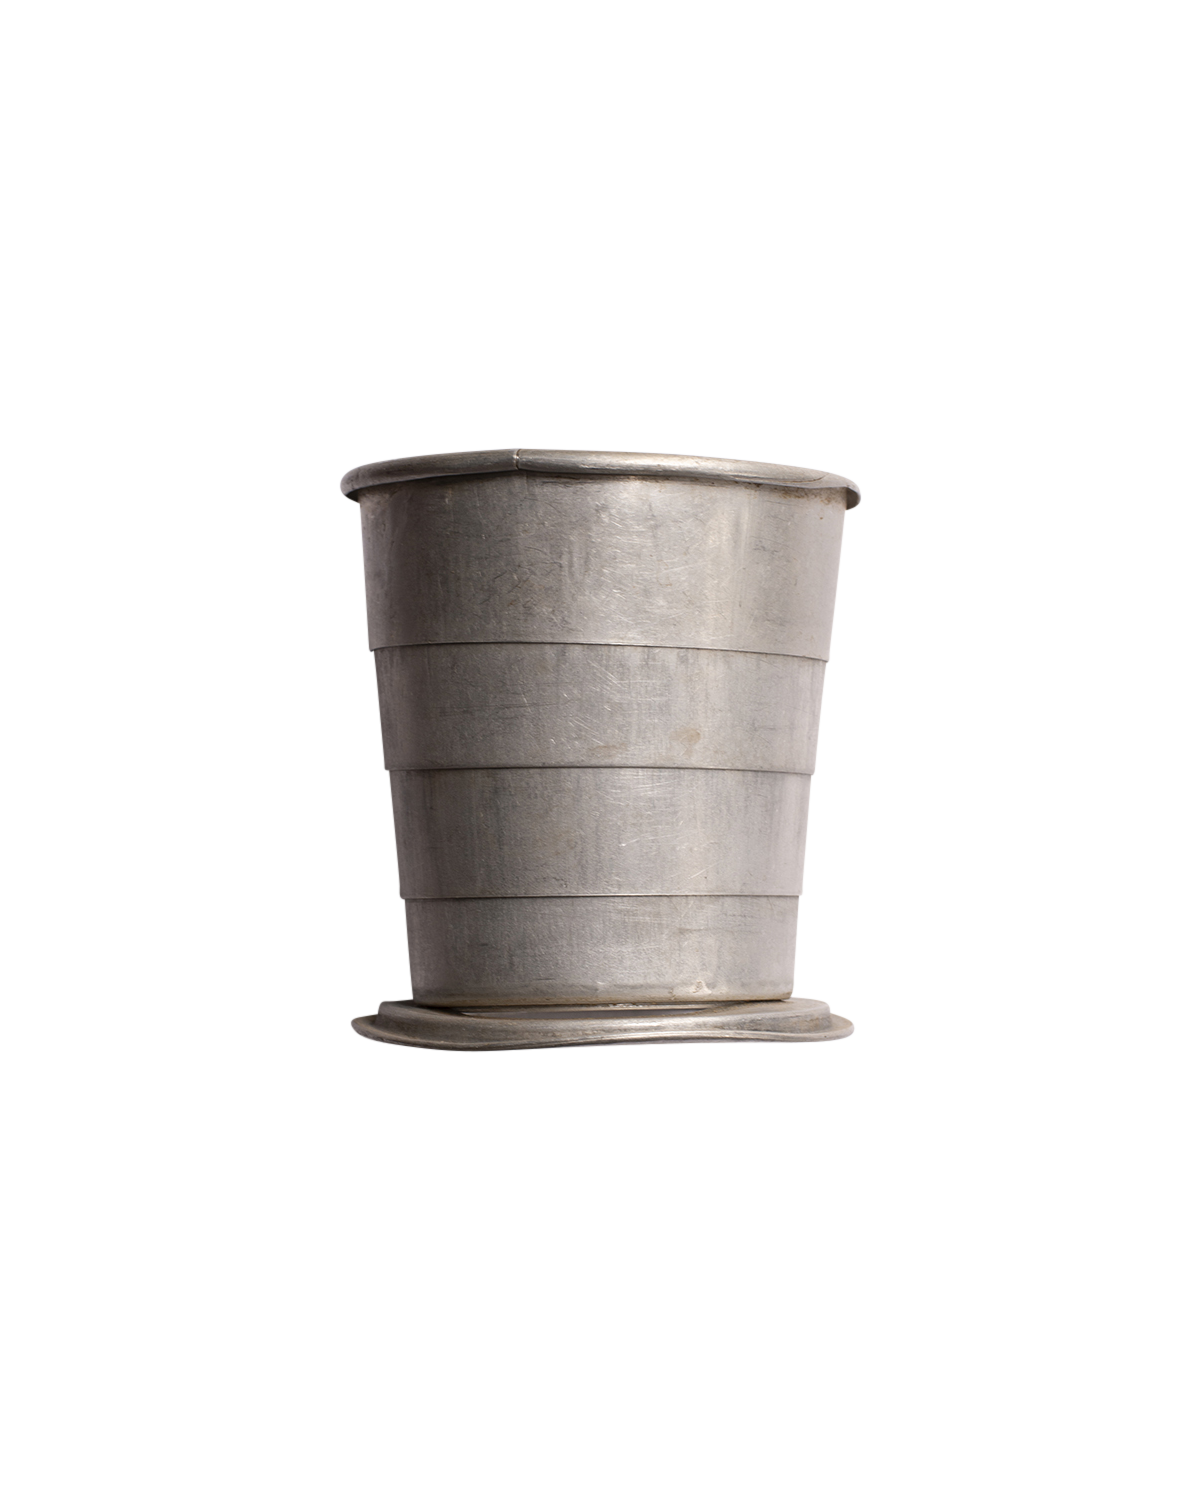 Collapsible Aluminium Cup